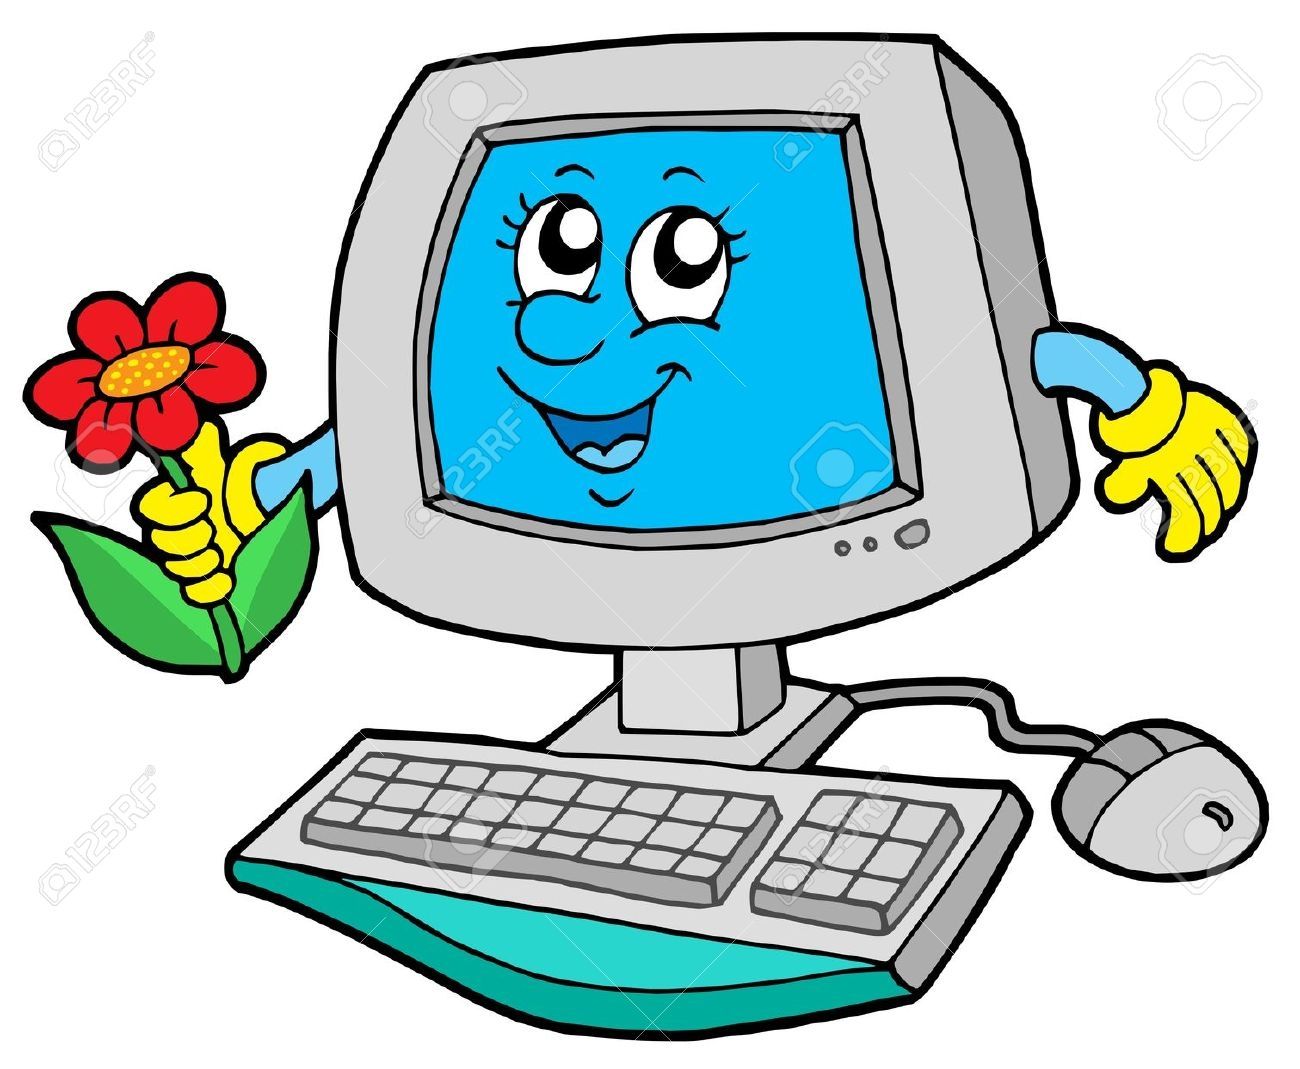 Computer clipart cartoon